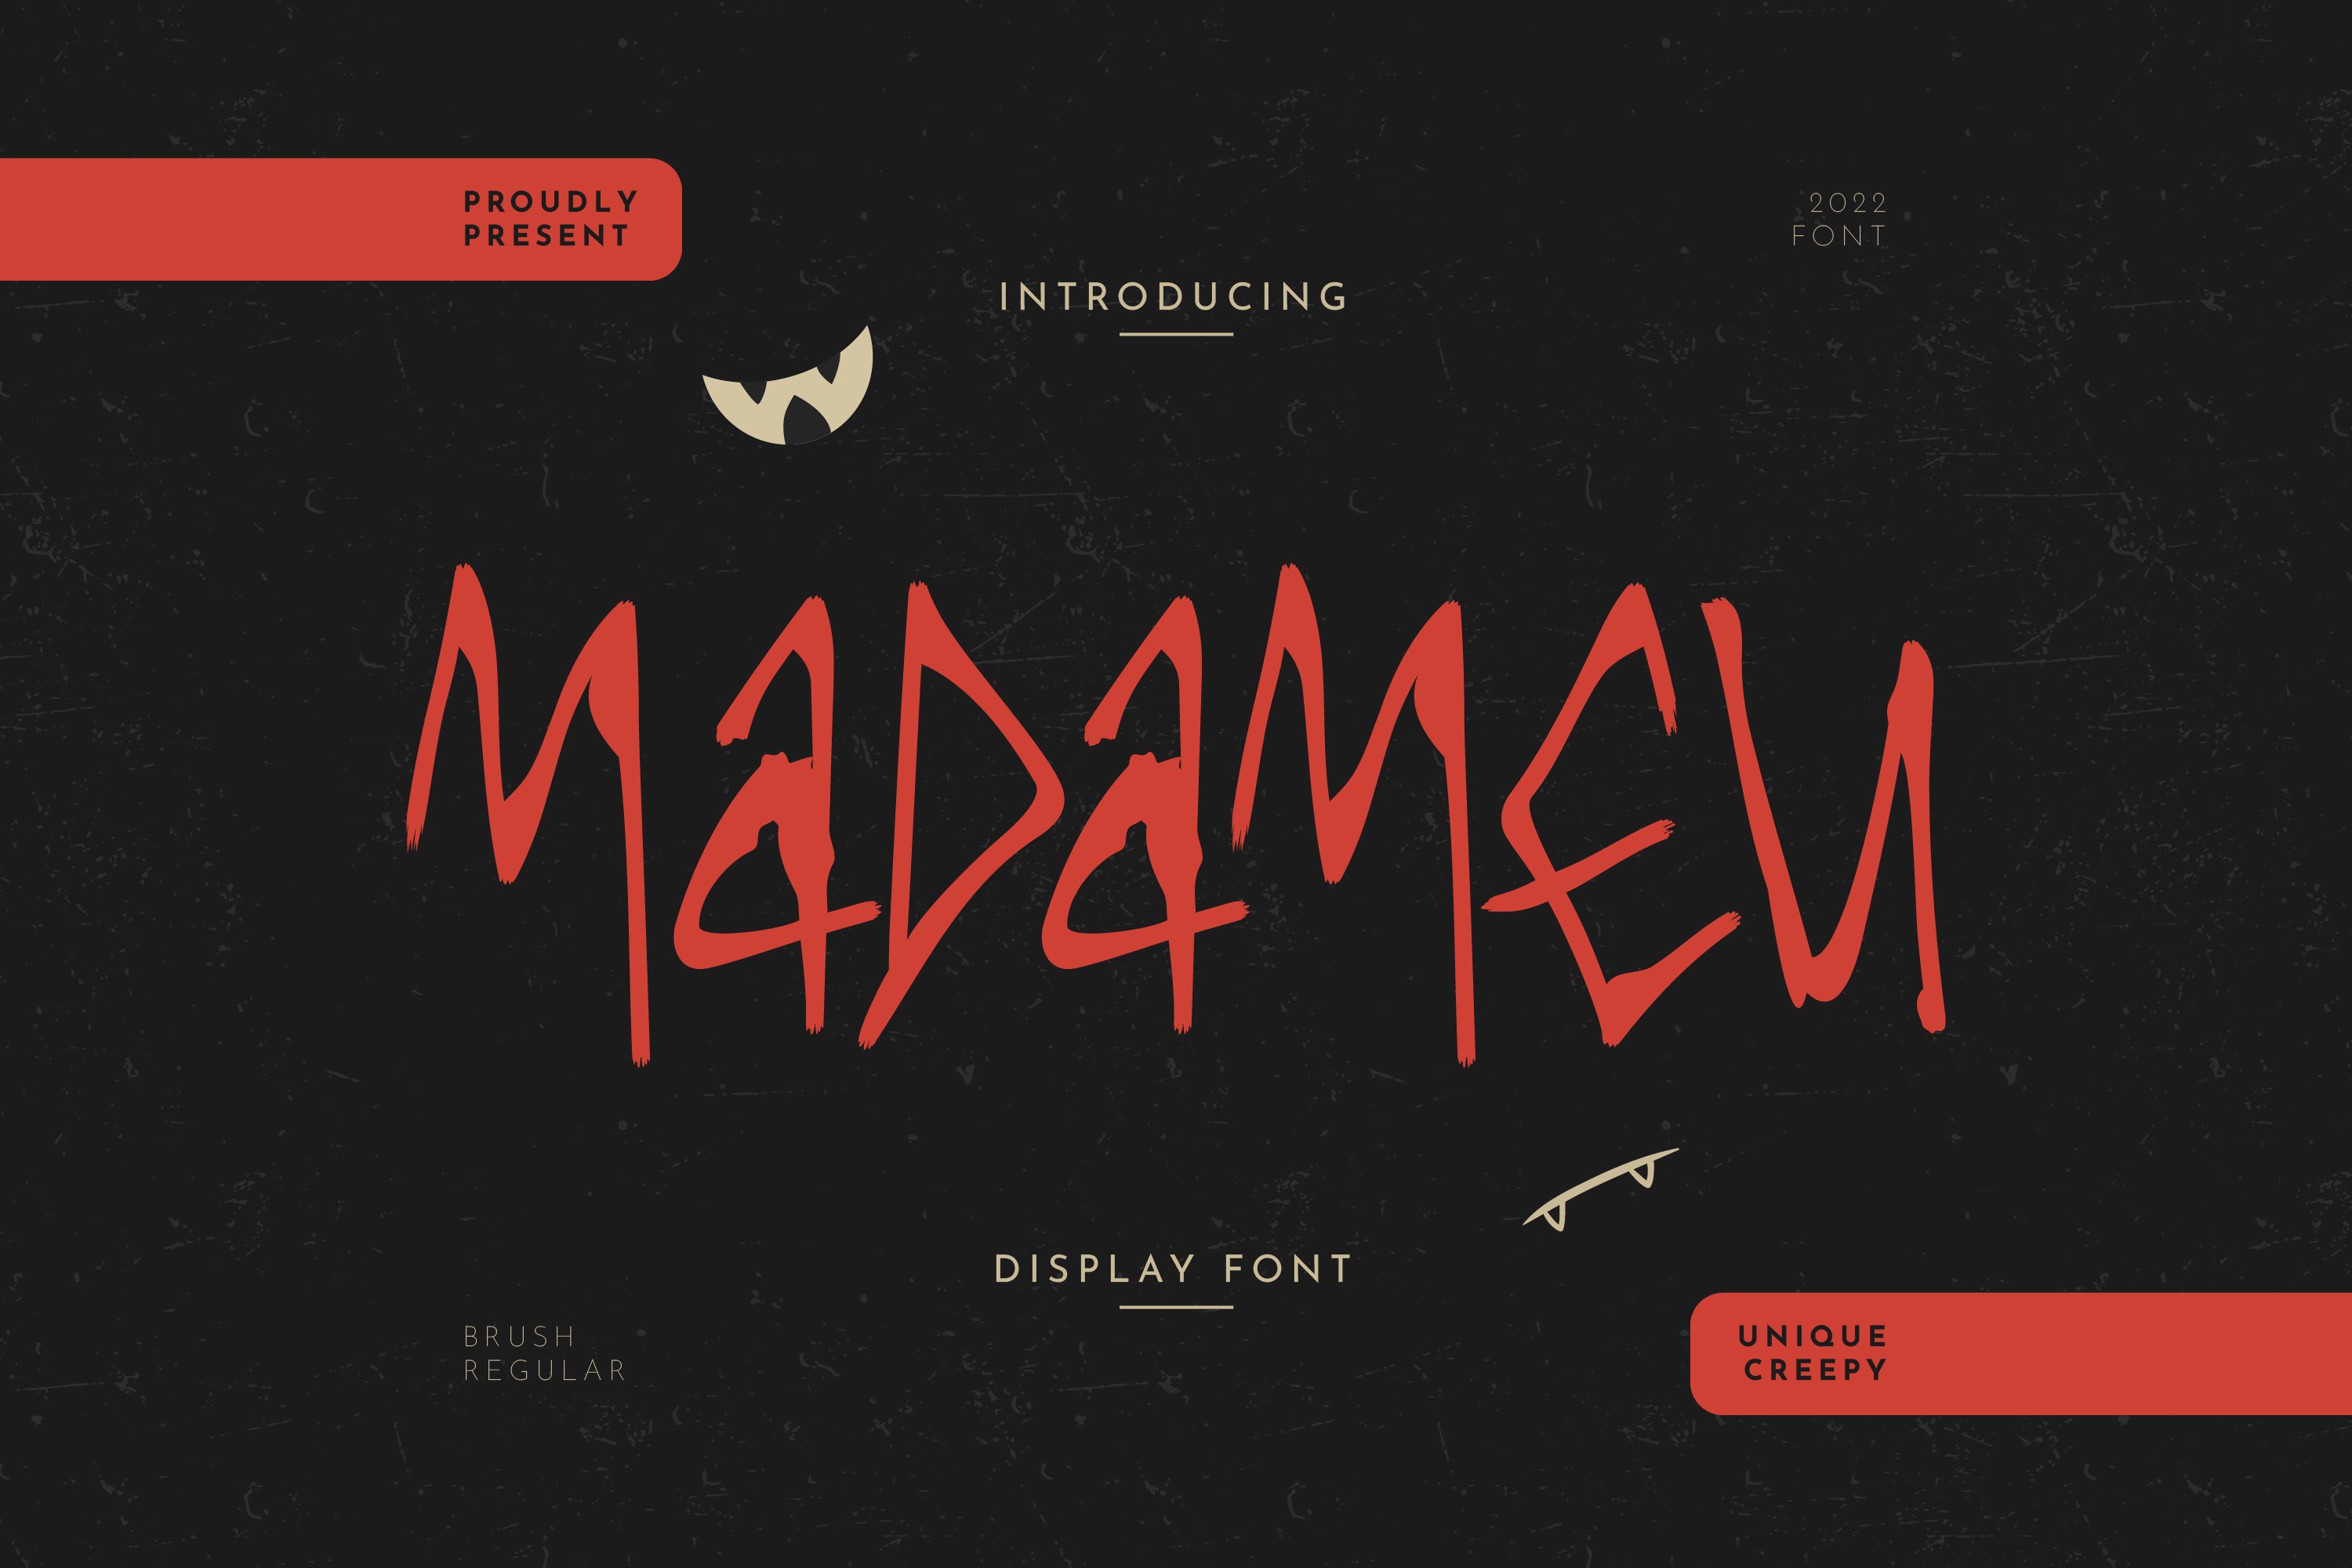 Madameu Creepy Display Font cover image.